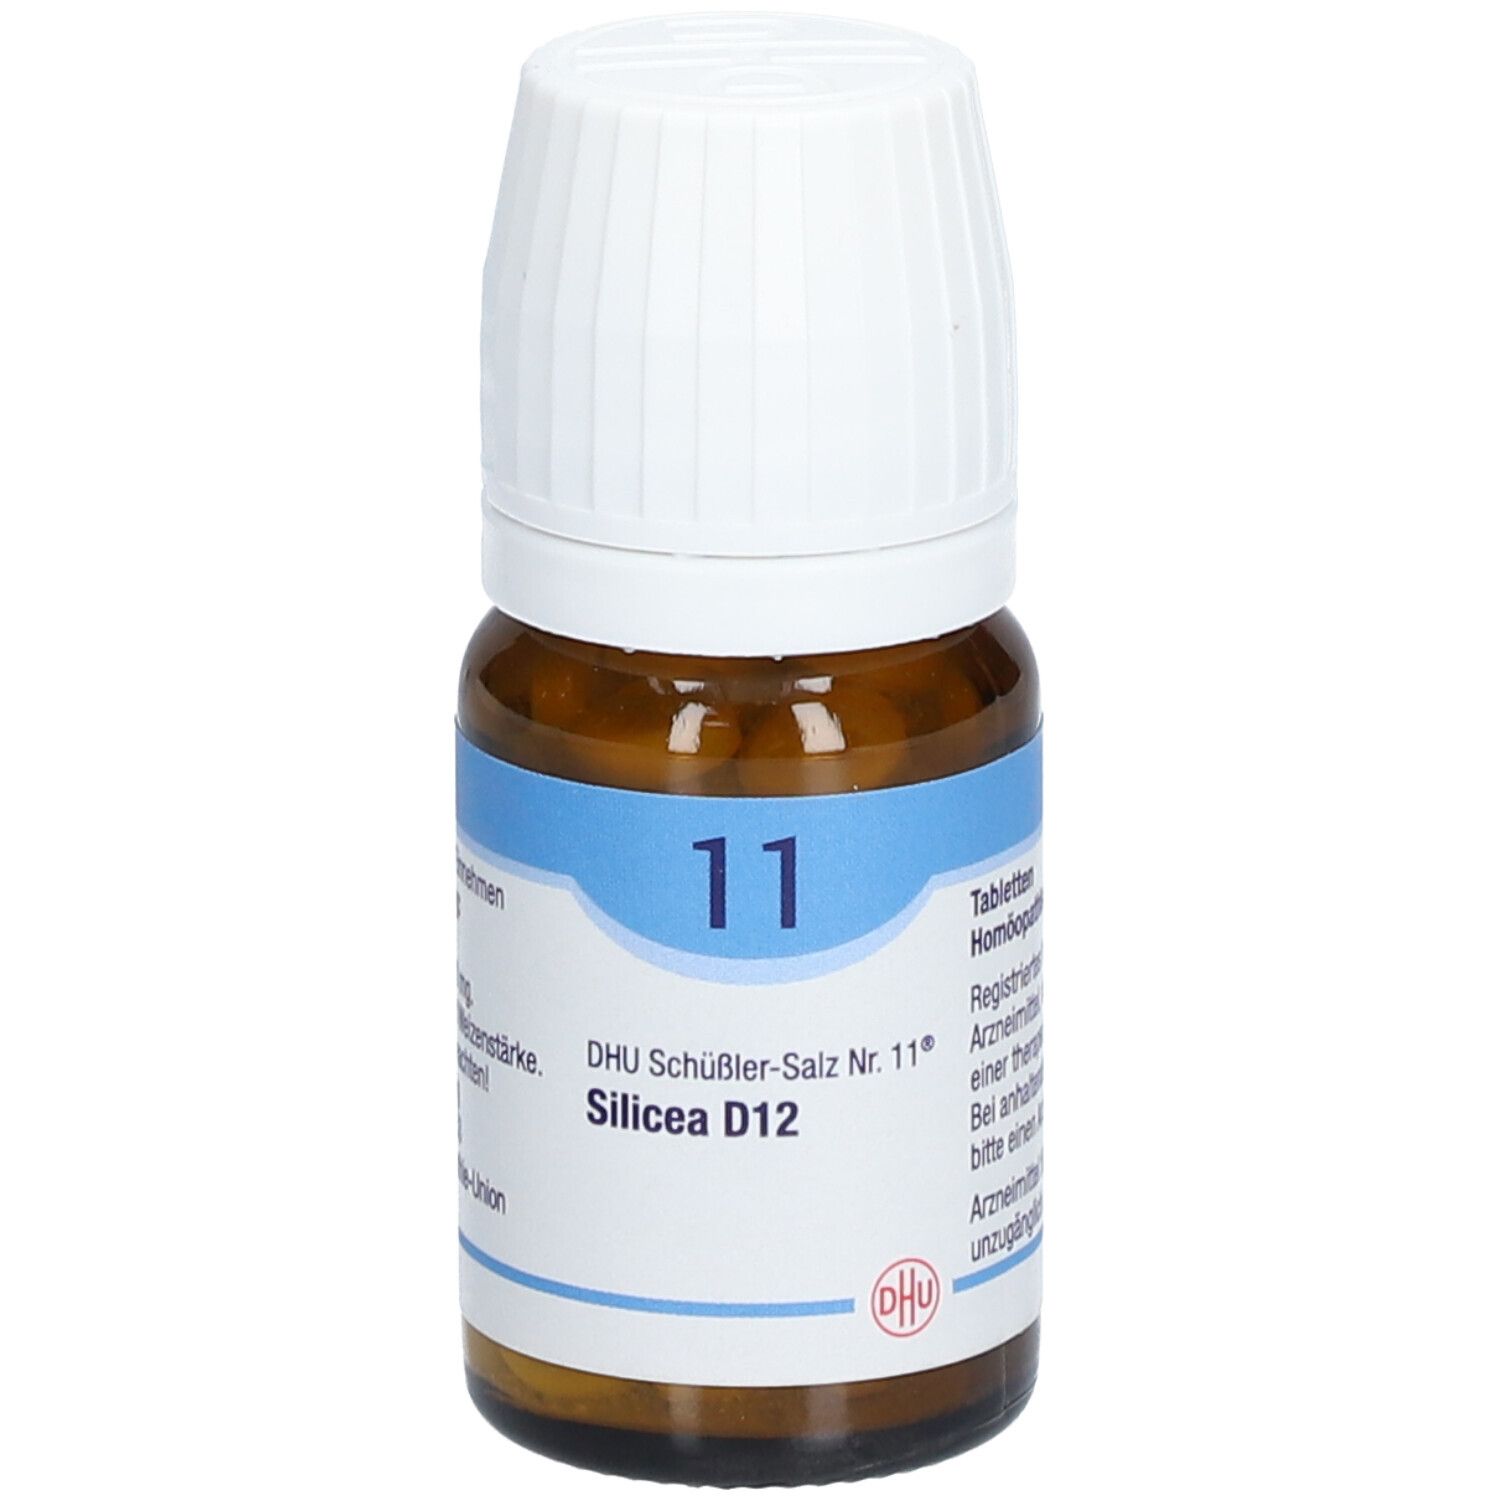 DHU Schüßler-Salz Nr. 11® Silicea D 12